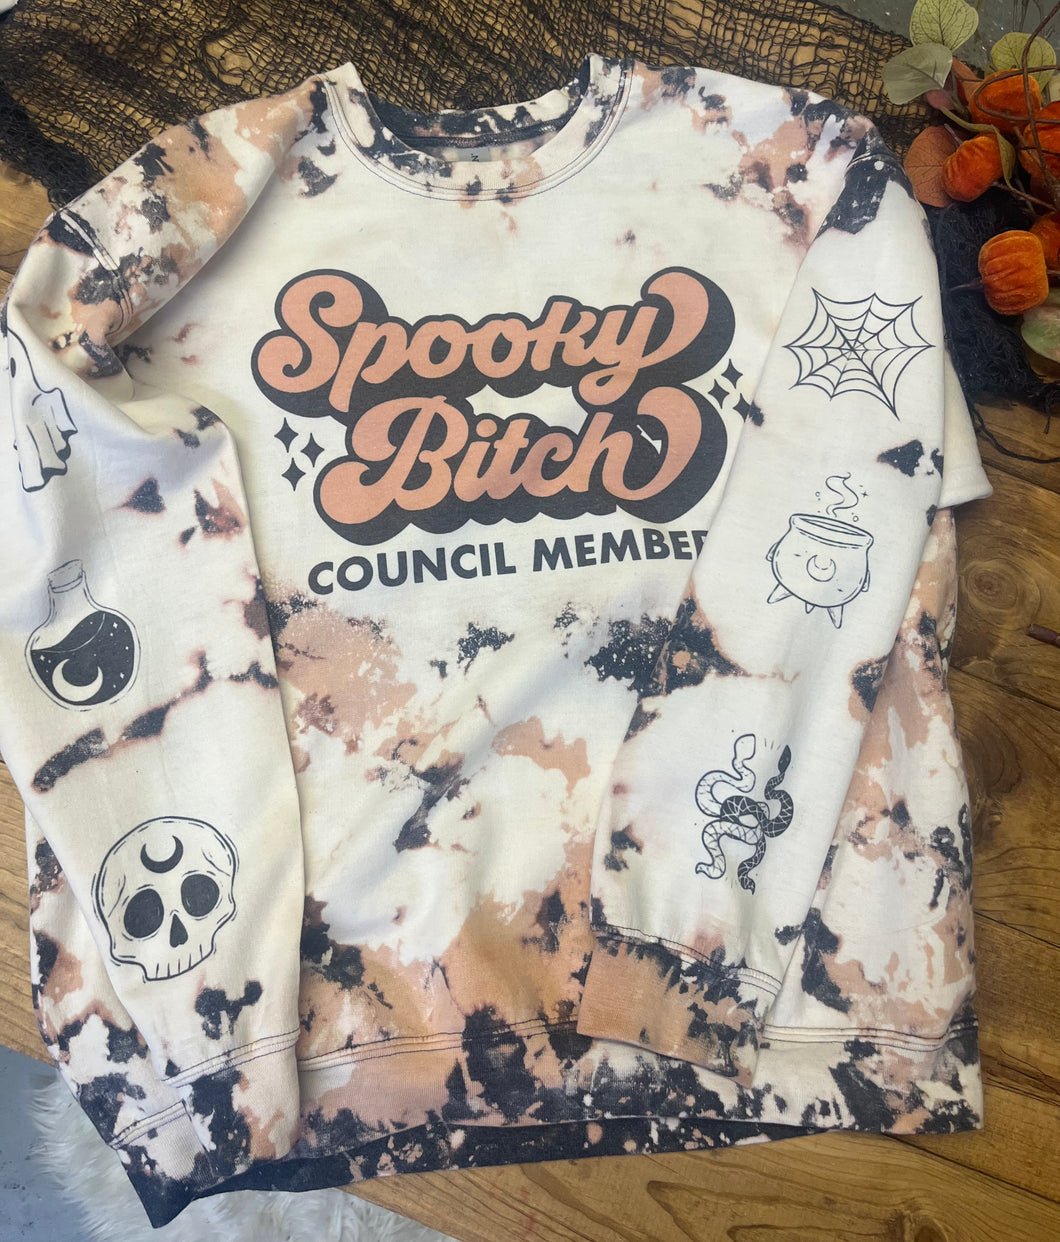 Soooky bitch council member sweatshirt